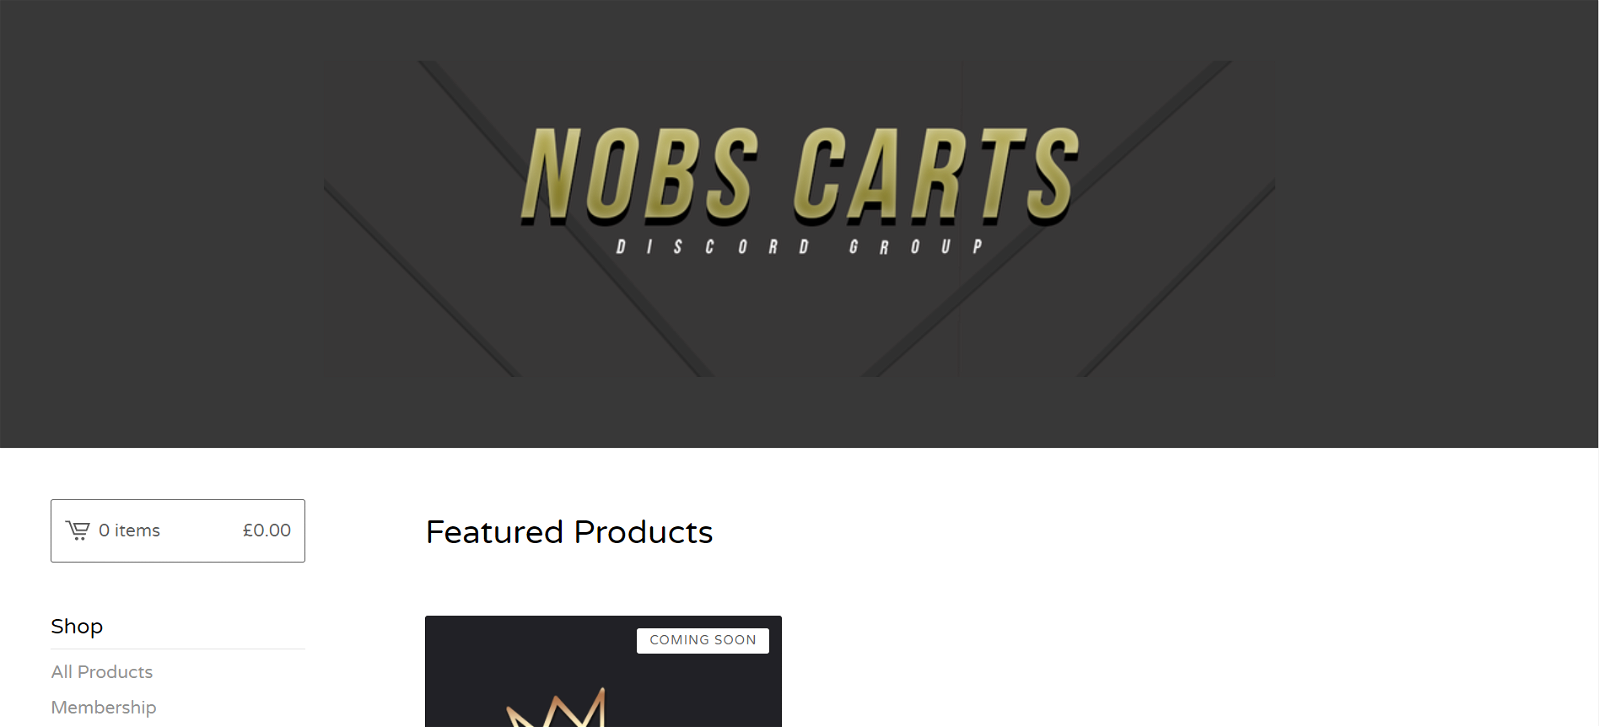 NOBS Carts cook group presentation banner